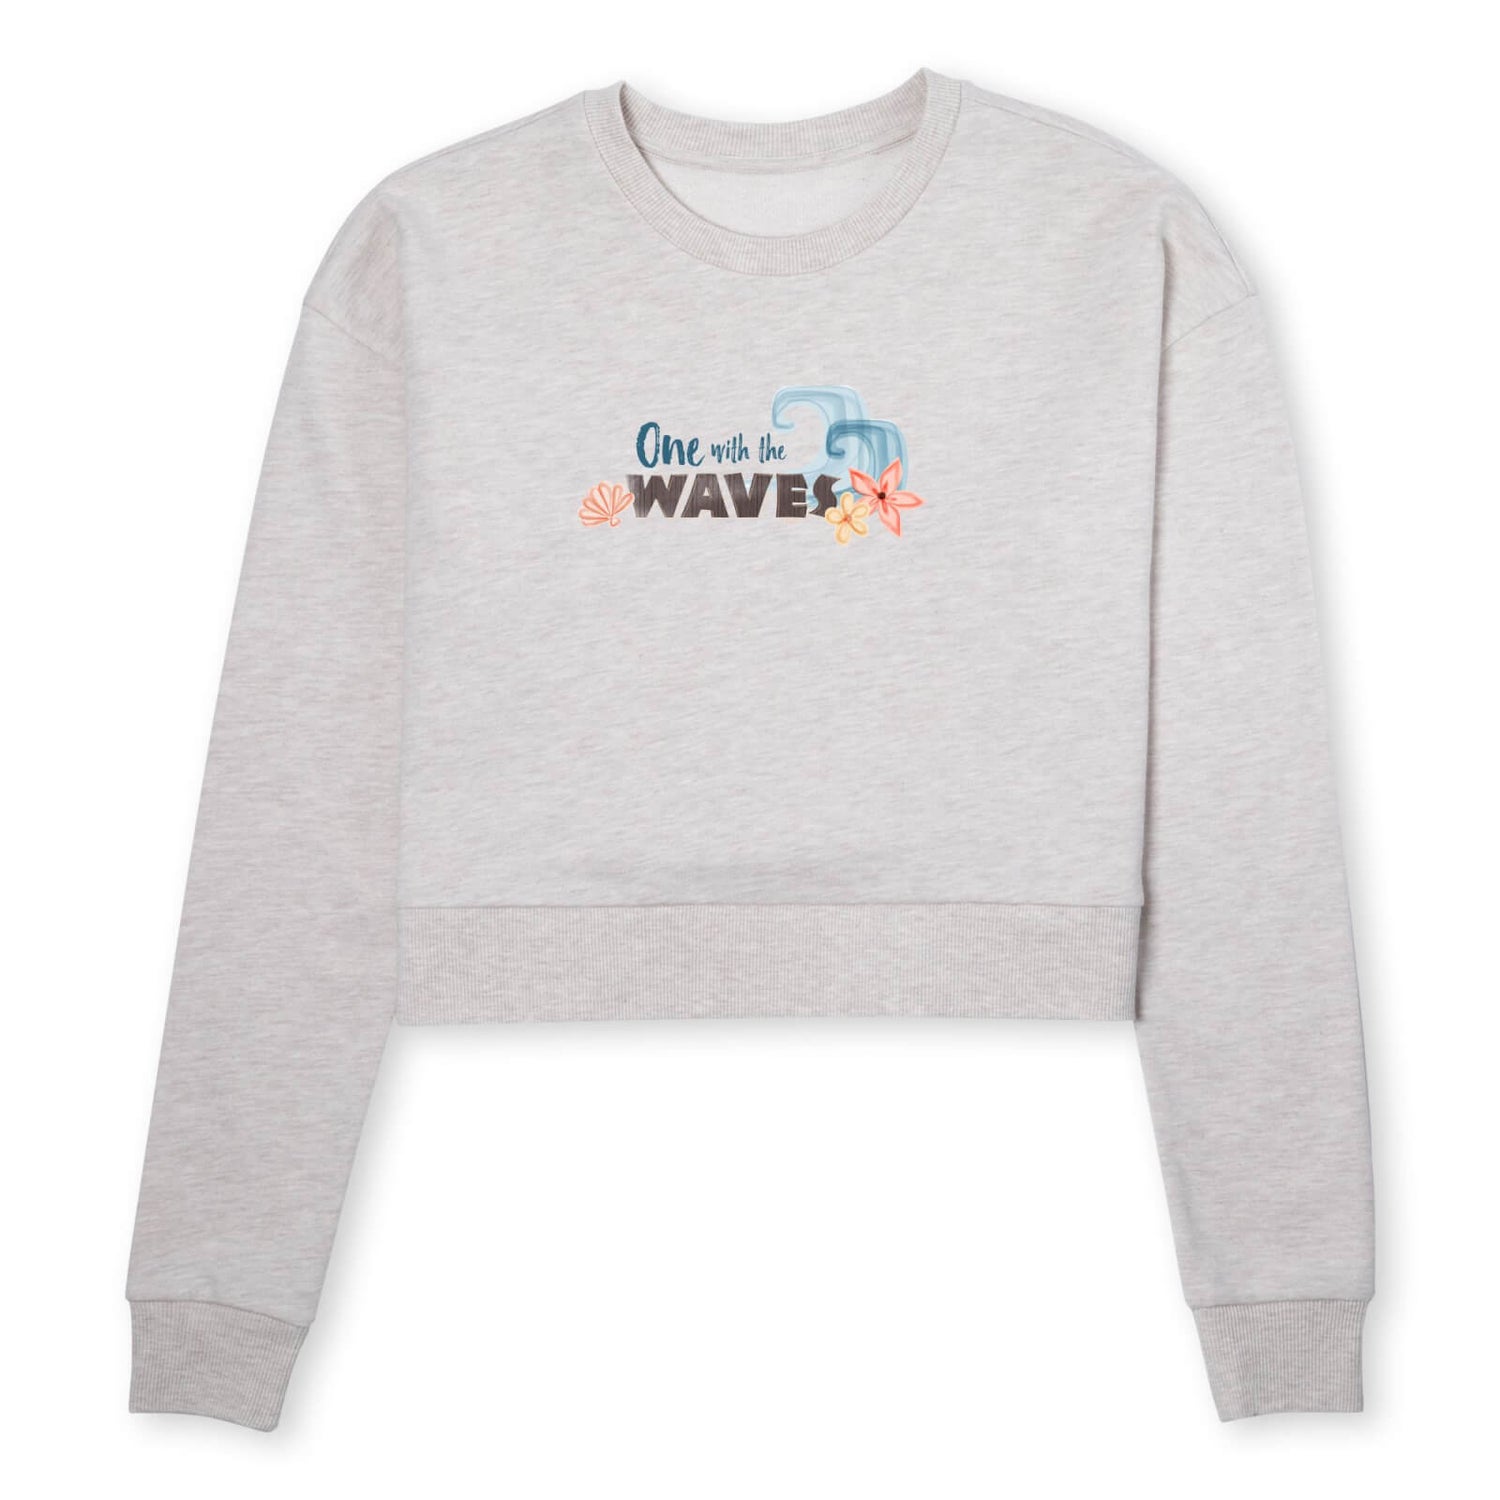 Moana One With The Waves Women's Cropped Sweatshirt - Ecru Marl